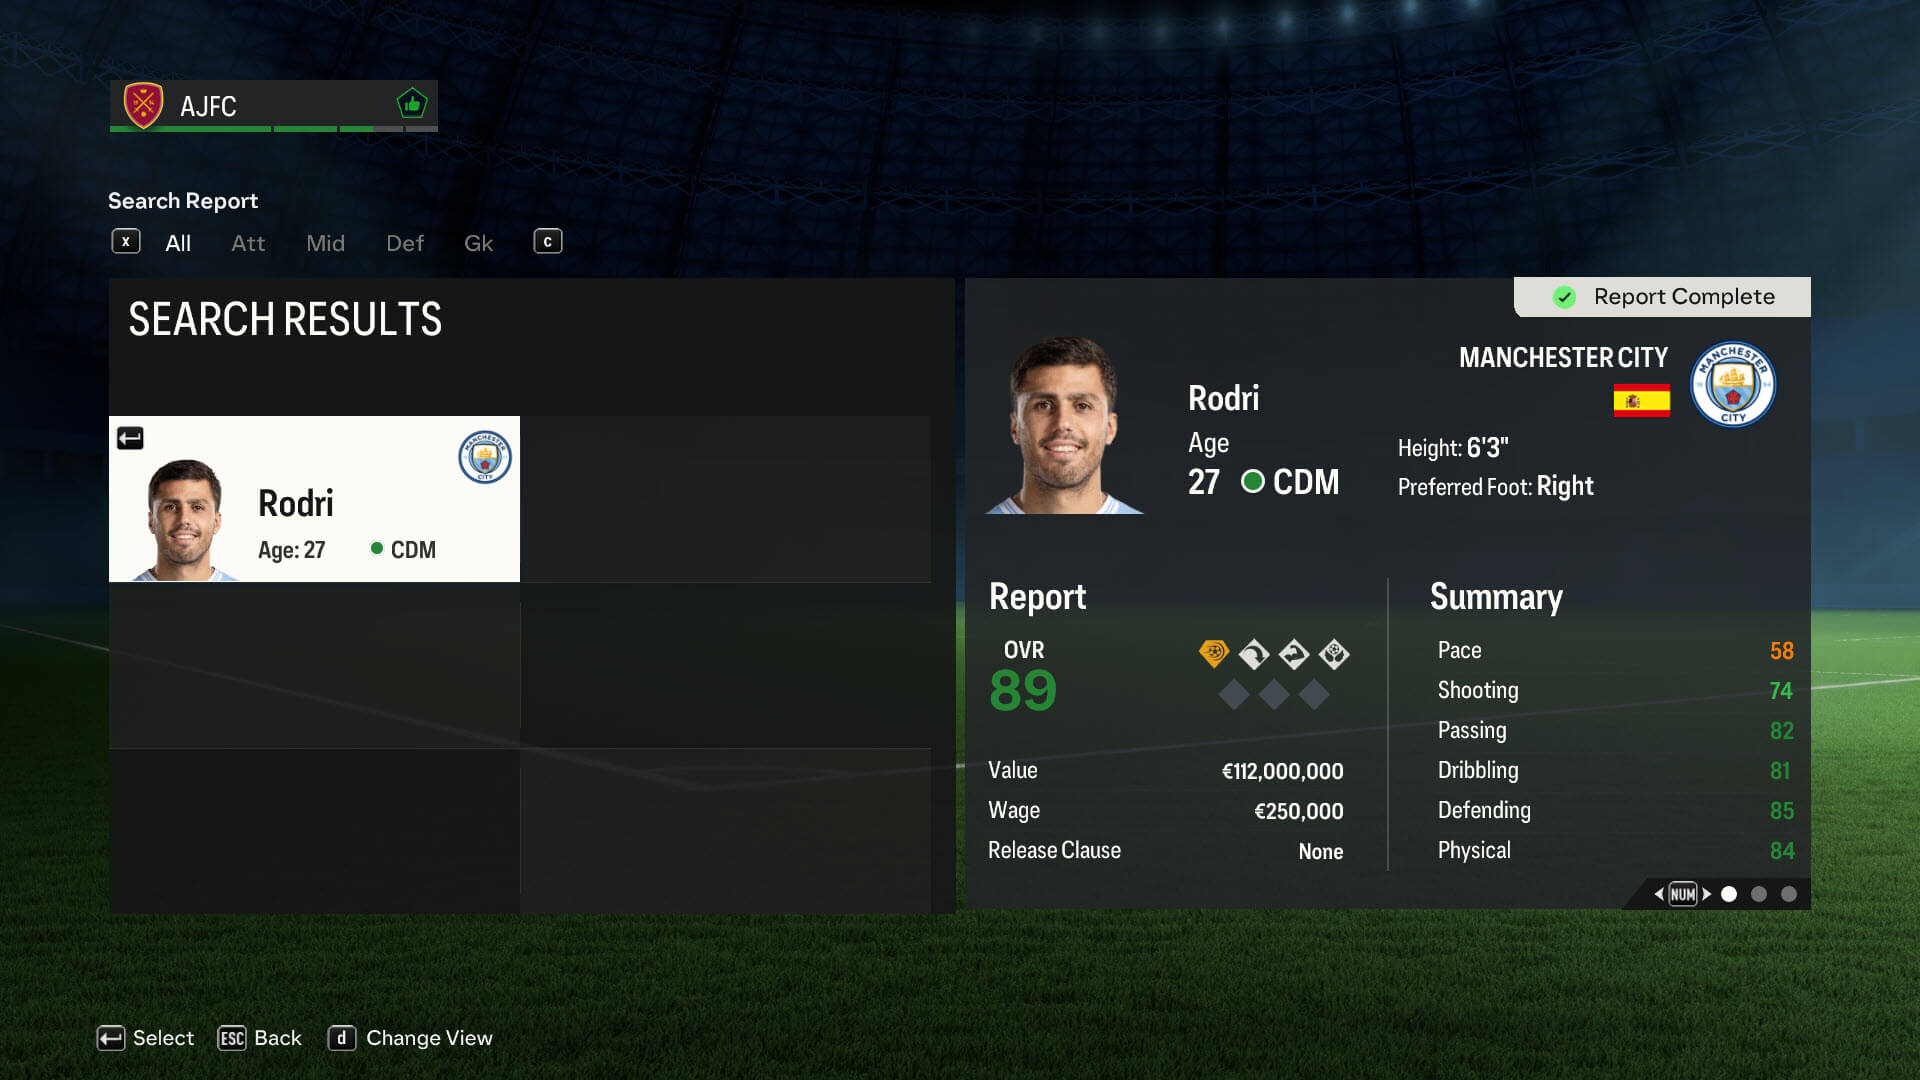 rodri - A great player